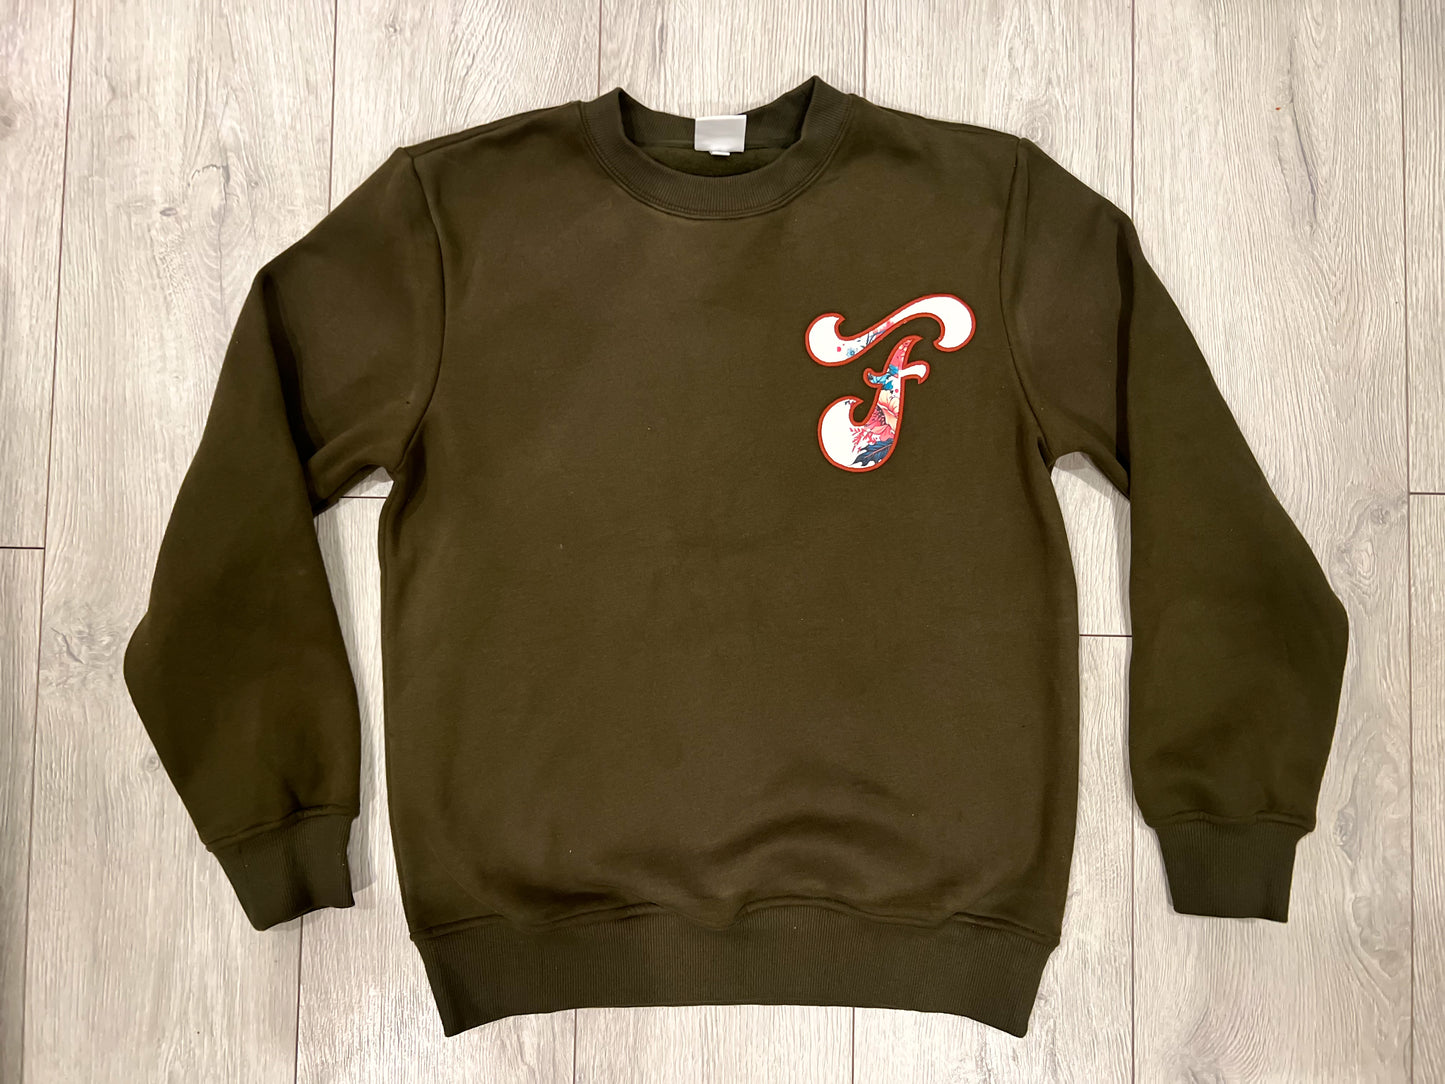 “F for Freshman” Crewneck Sweater